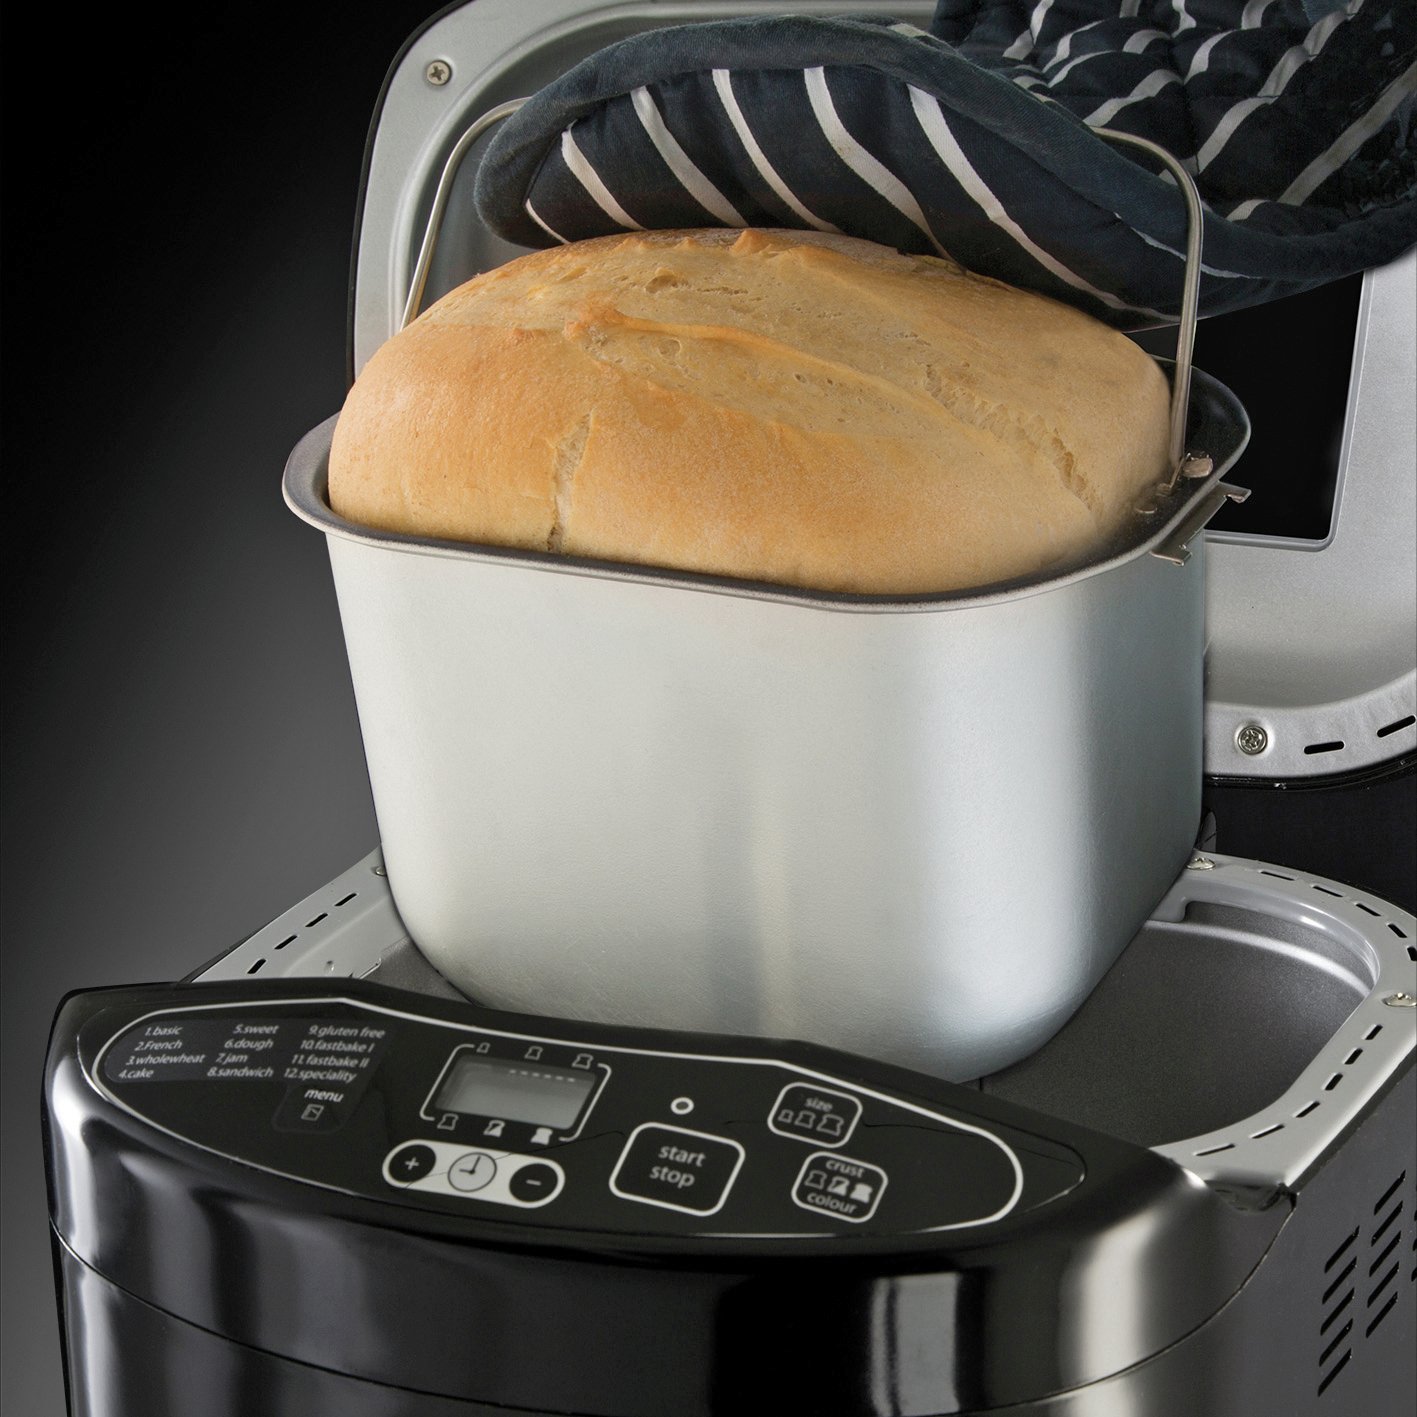 compact bread maker uk